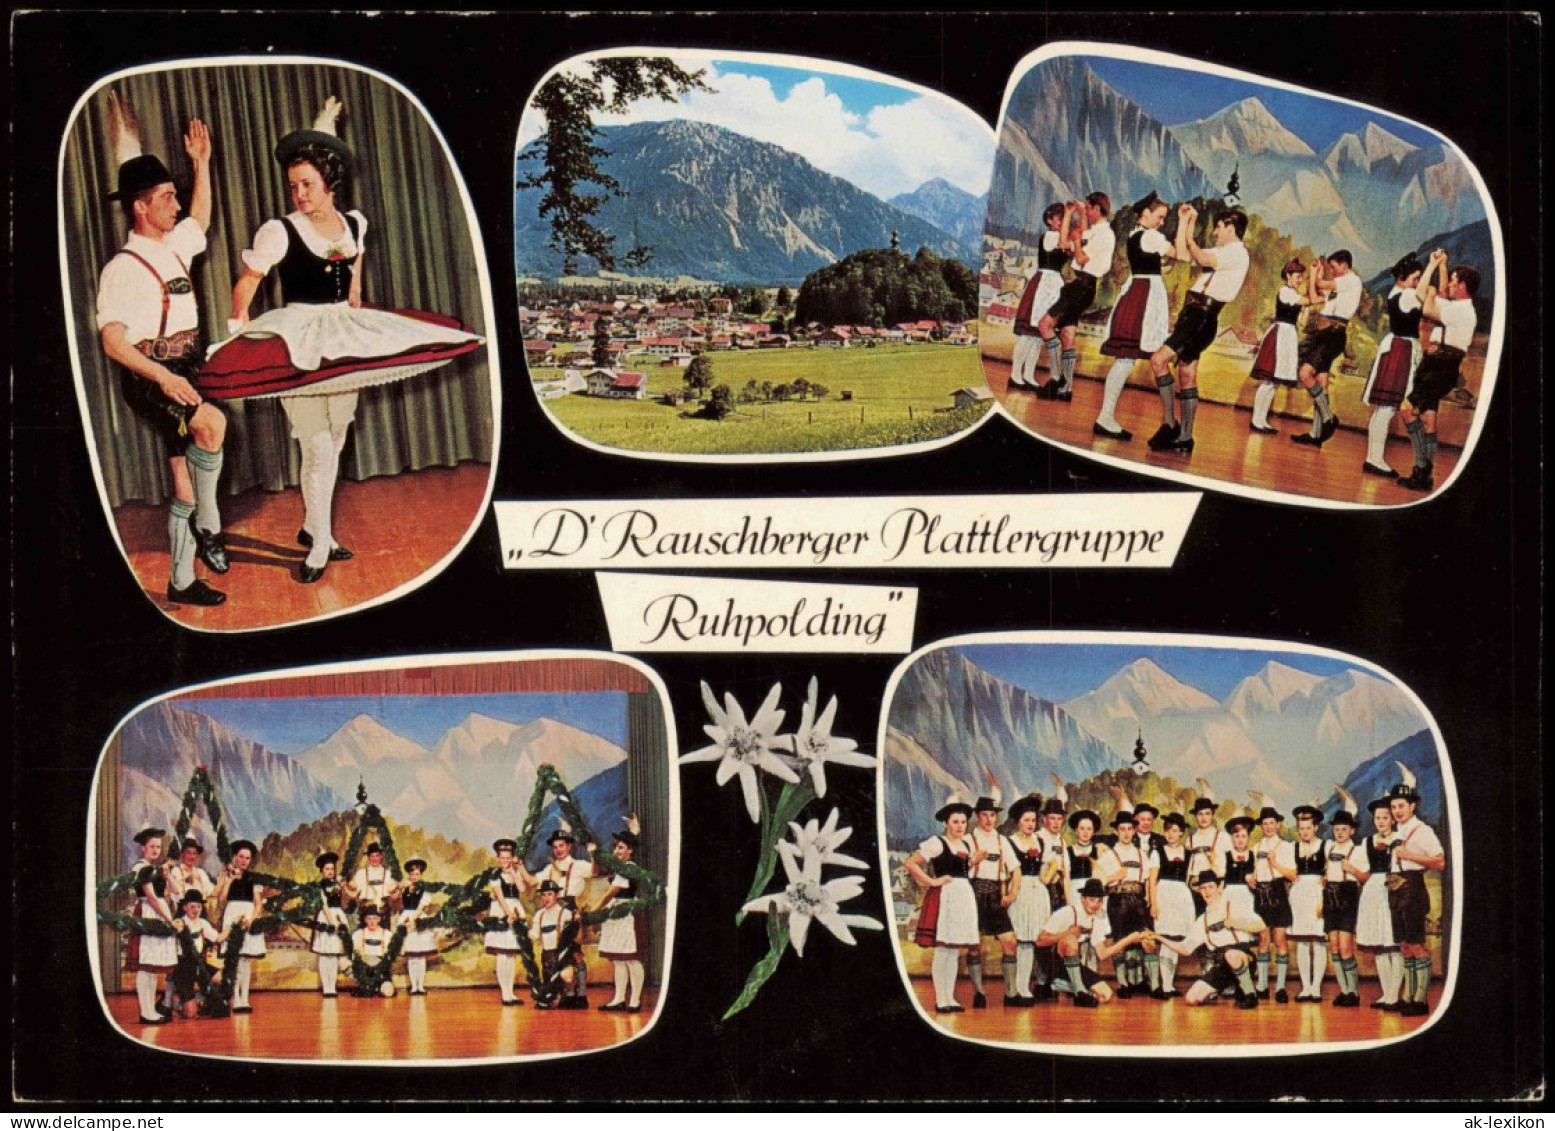 Ruhpolding Mehrbildkarte Mit Der Rauschberger Plattlergruppe 1960 - Ruhpolding